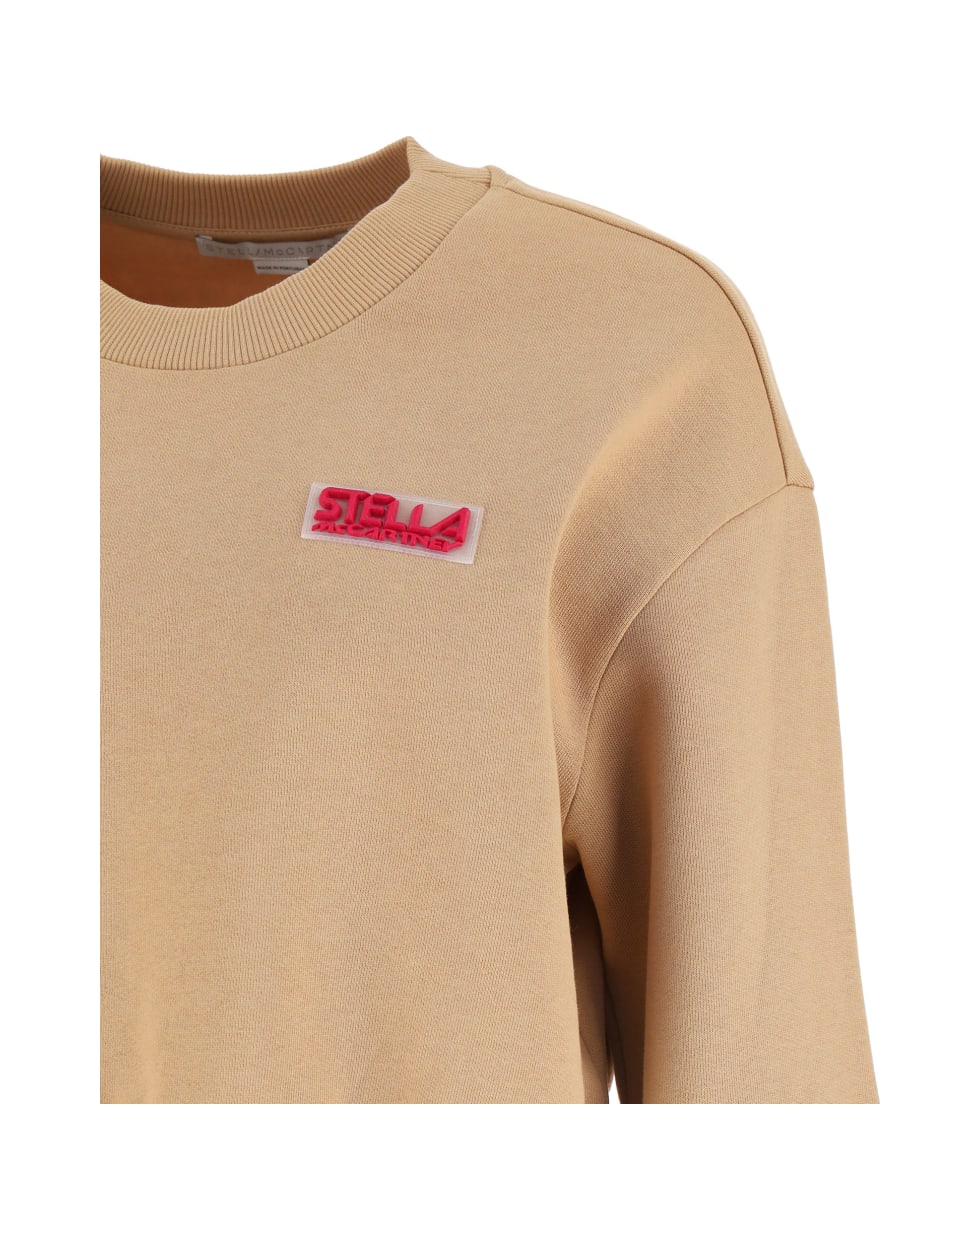 Stella McCartney Sweatshirt - Camel